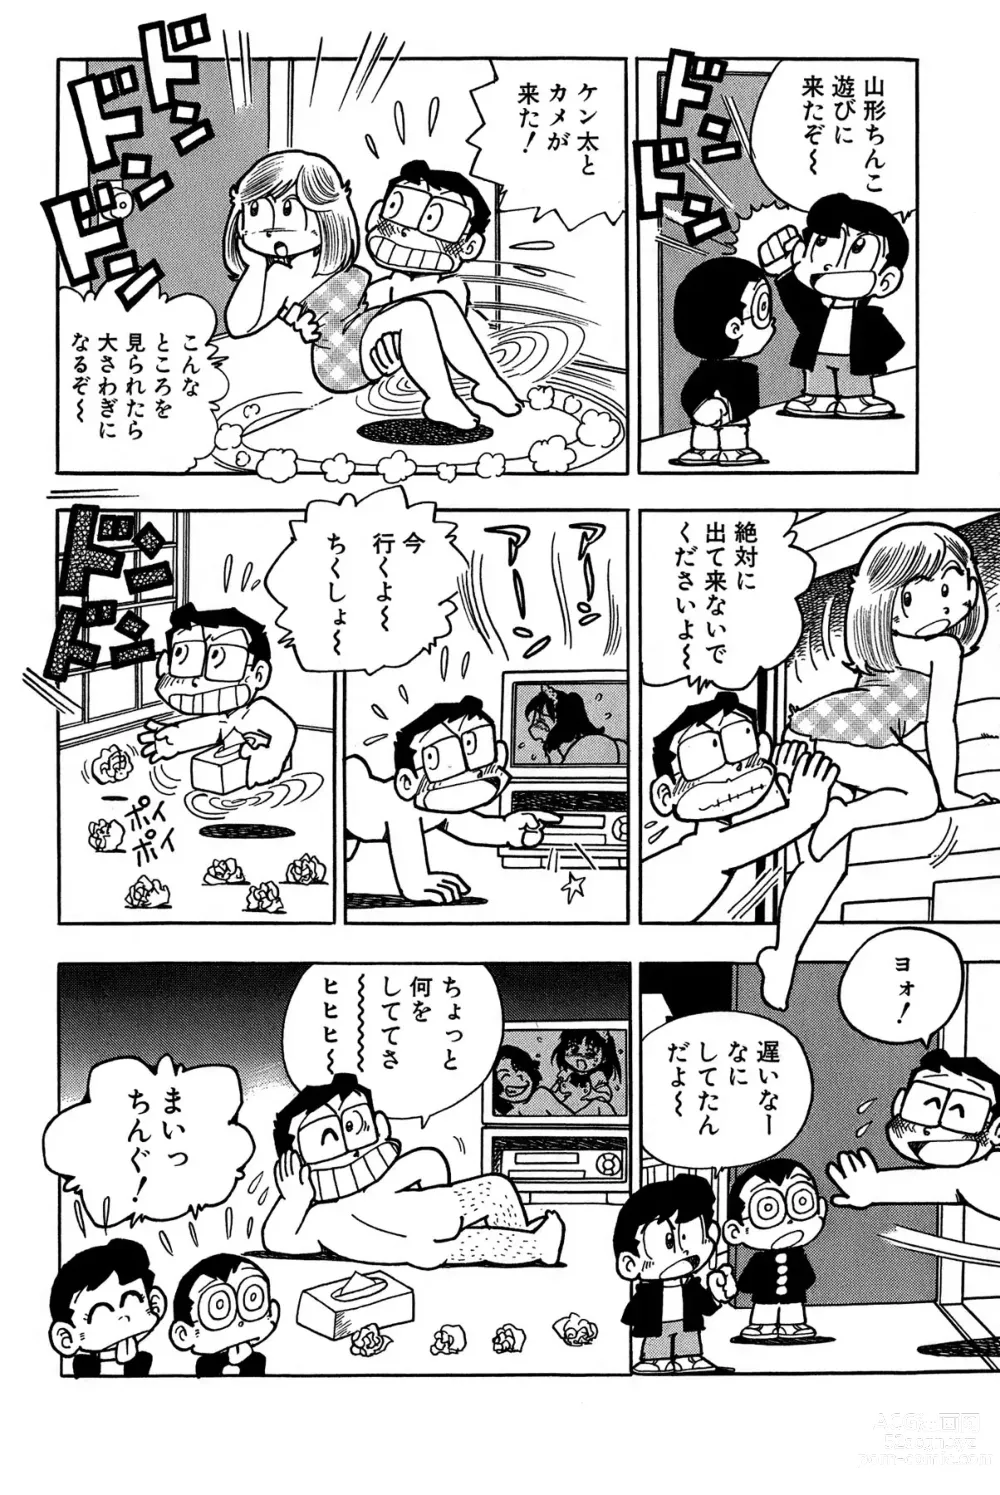 Page 203 of manga Maichiingu Machiko Sensei book pink